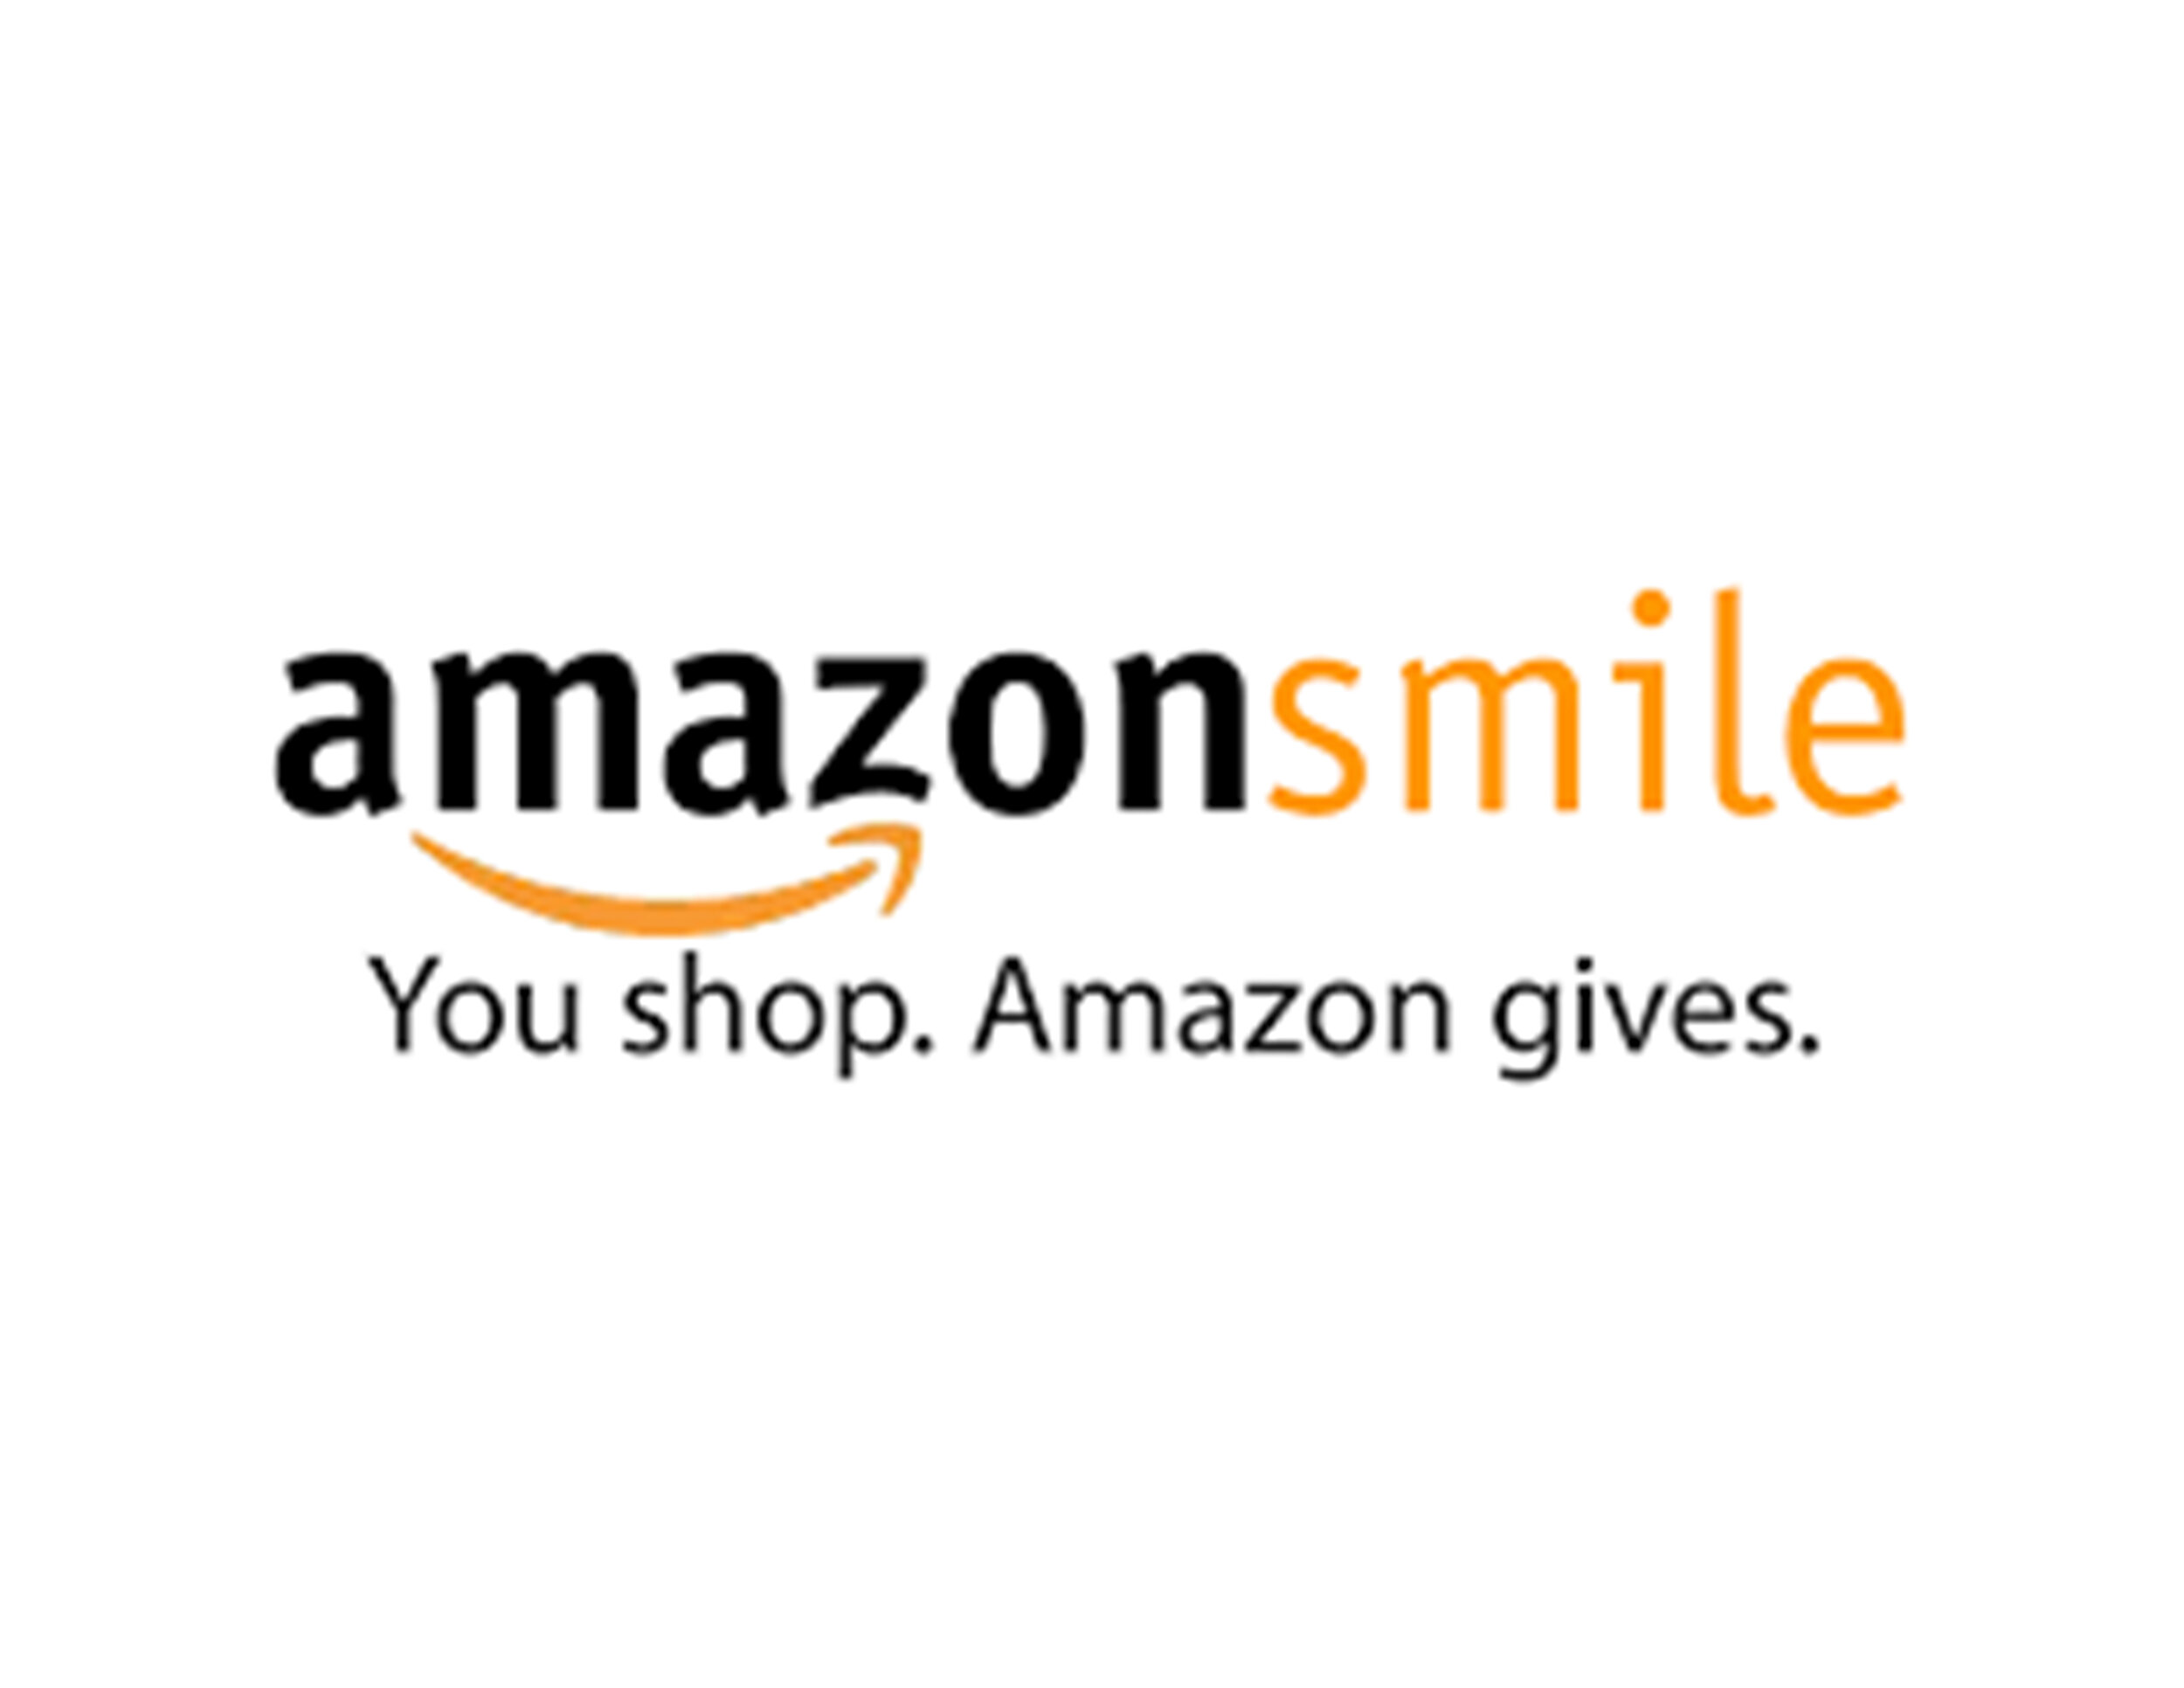 Amazon Smiles for Website.jpg